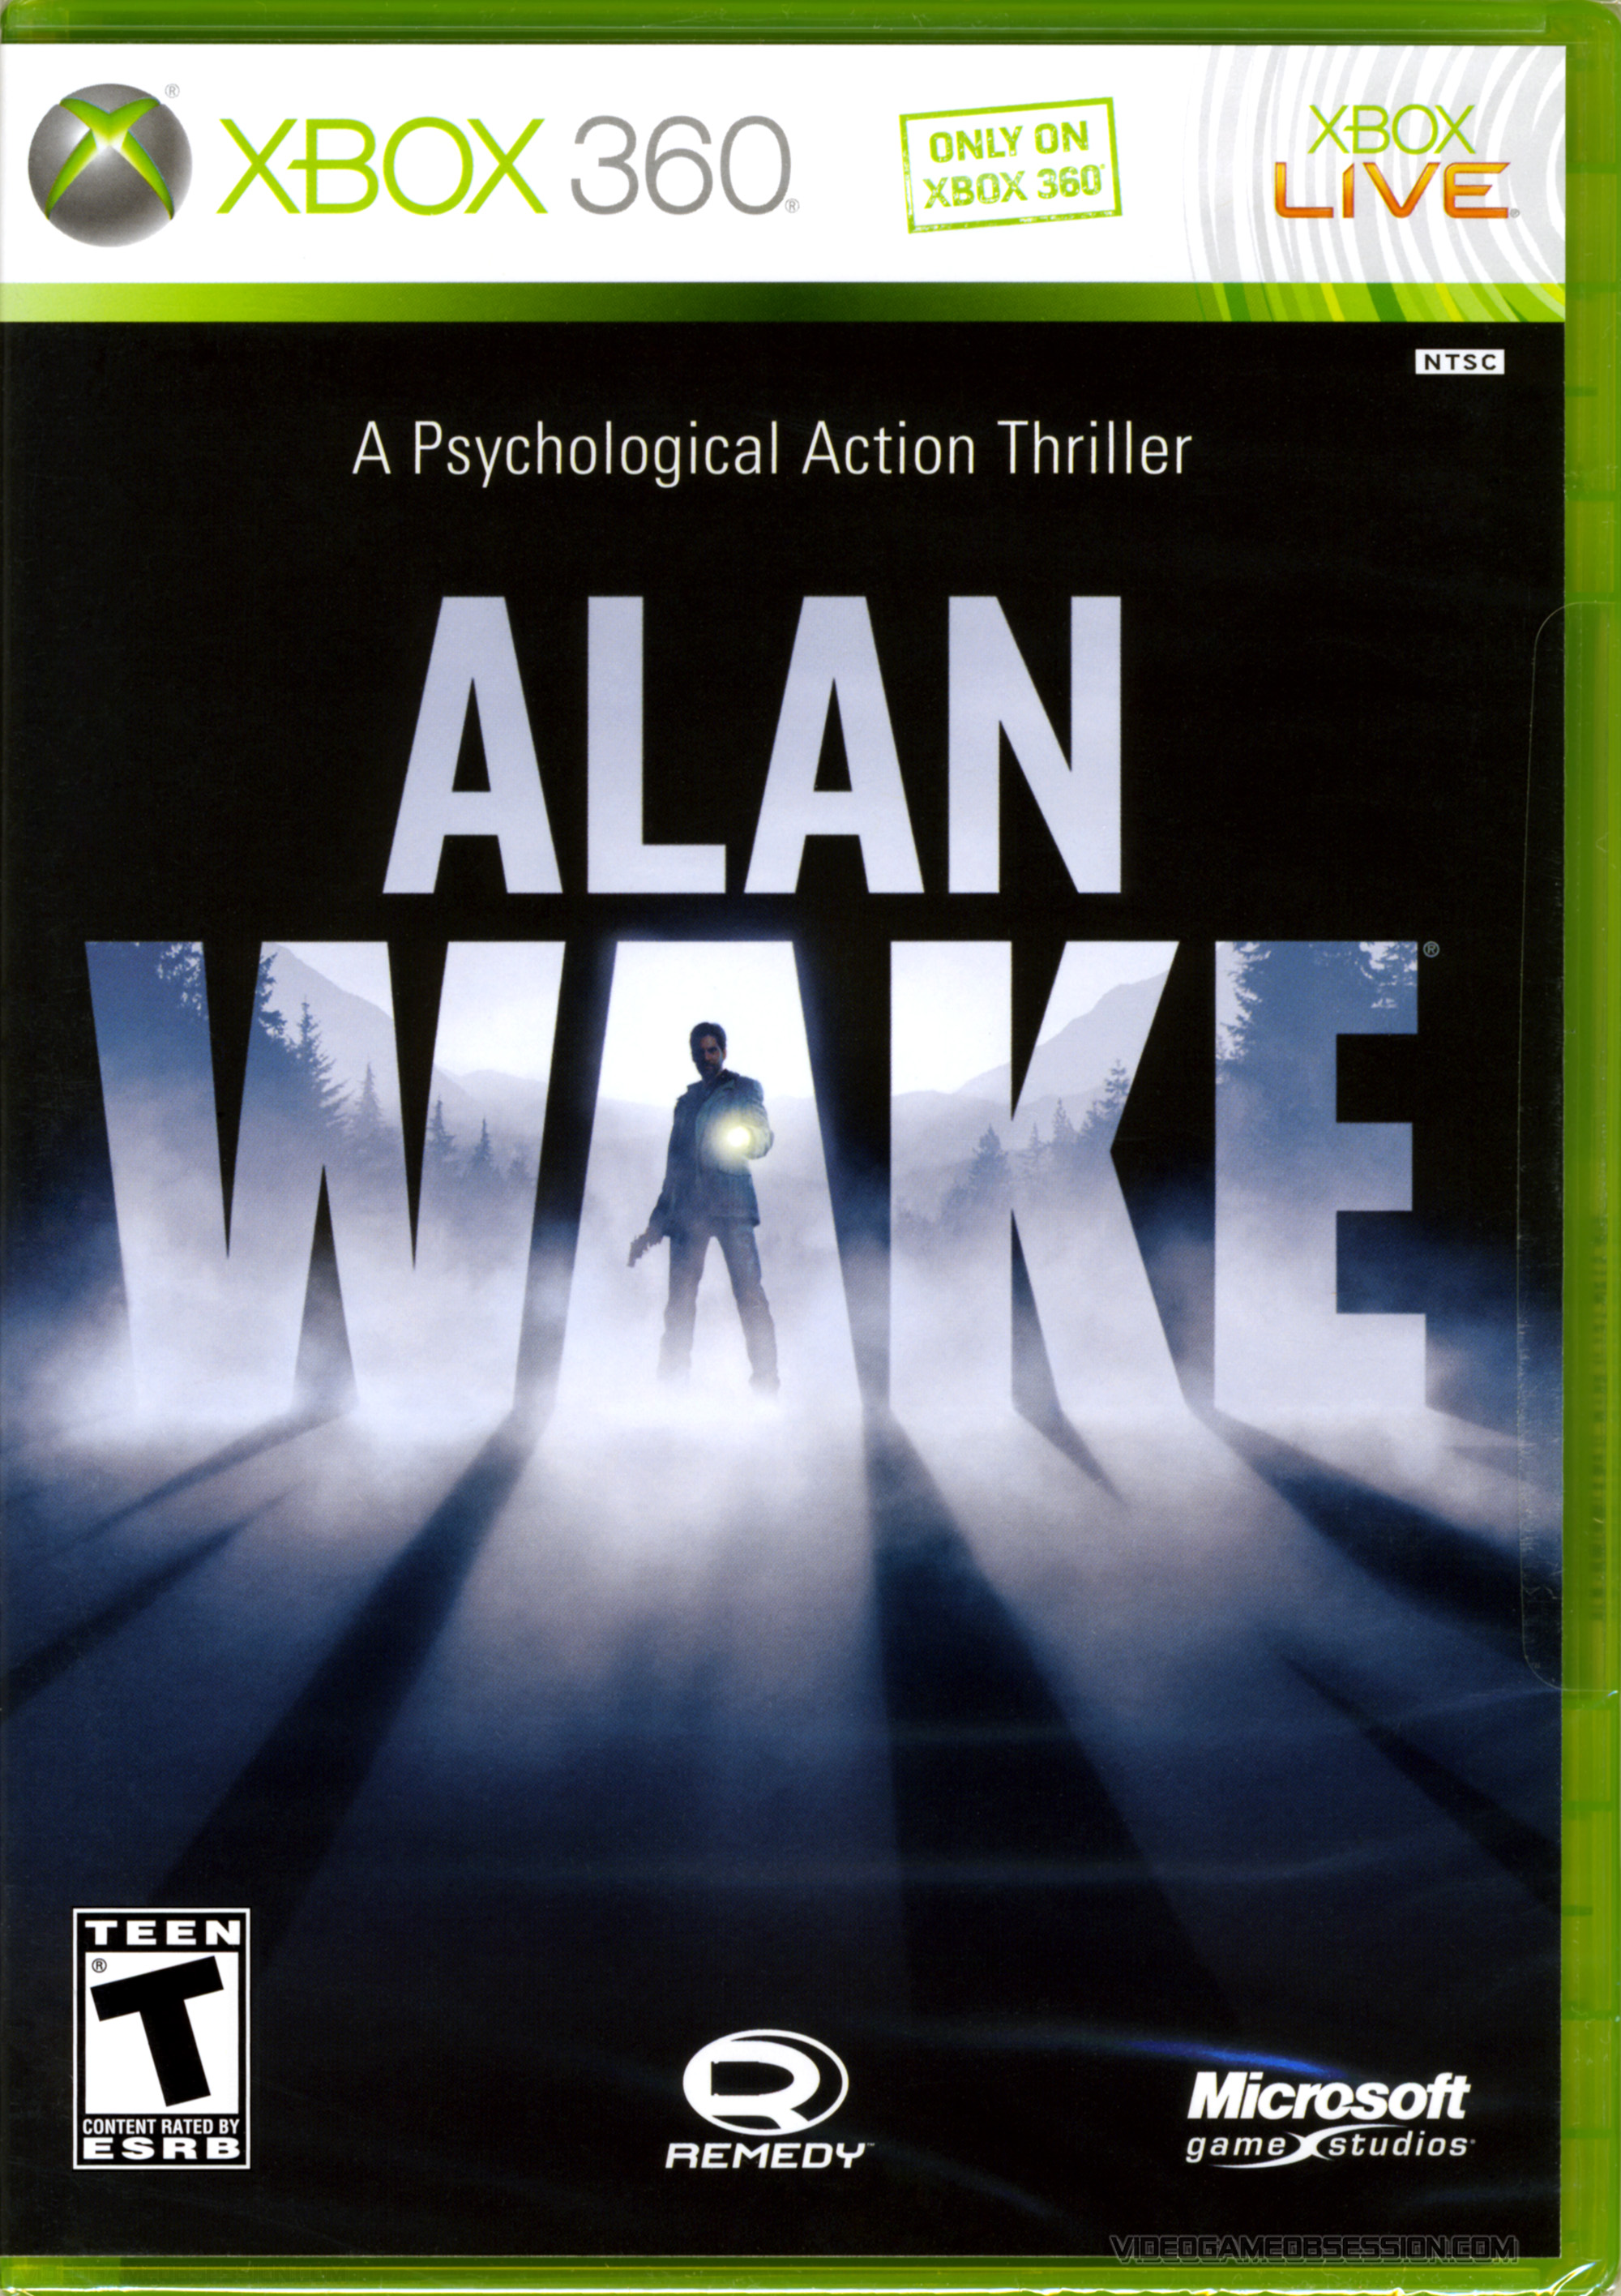 Xbox360-AlanWake-vgo.jpg